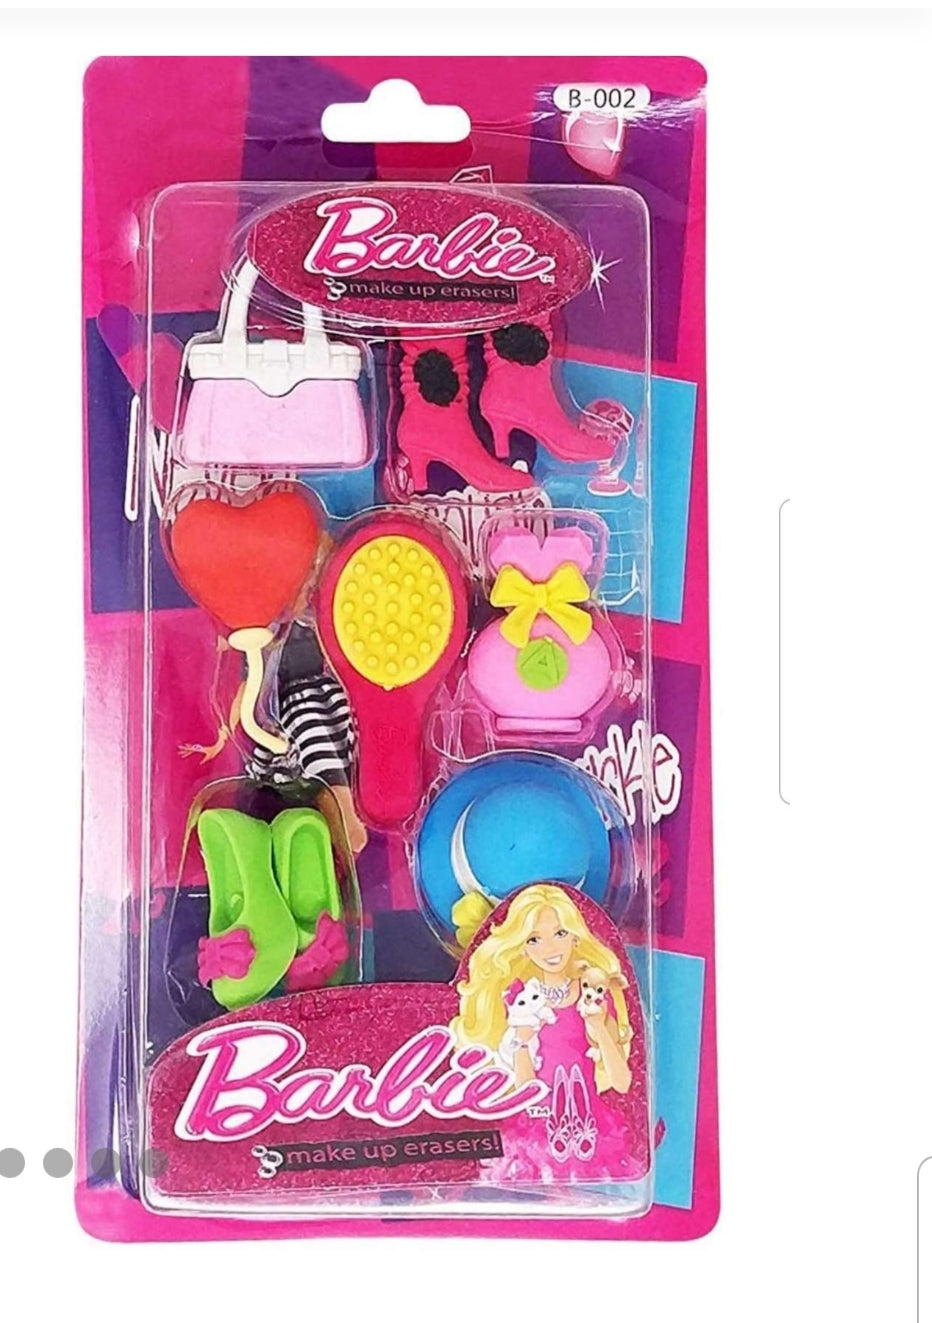 Barbie Fashion Girl Makeup Eraser